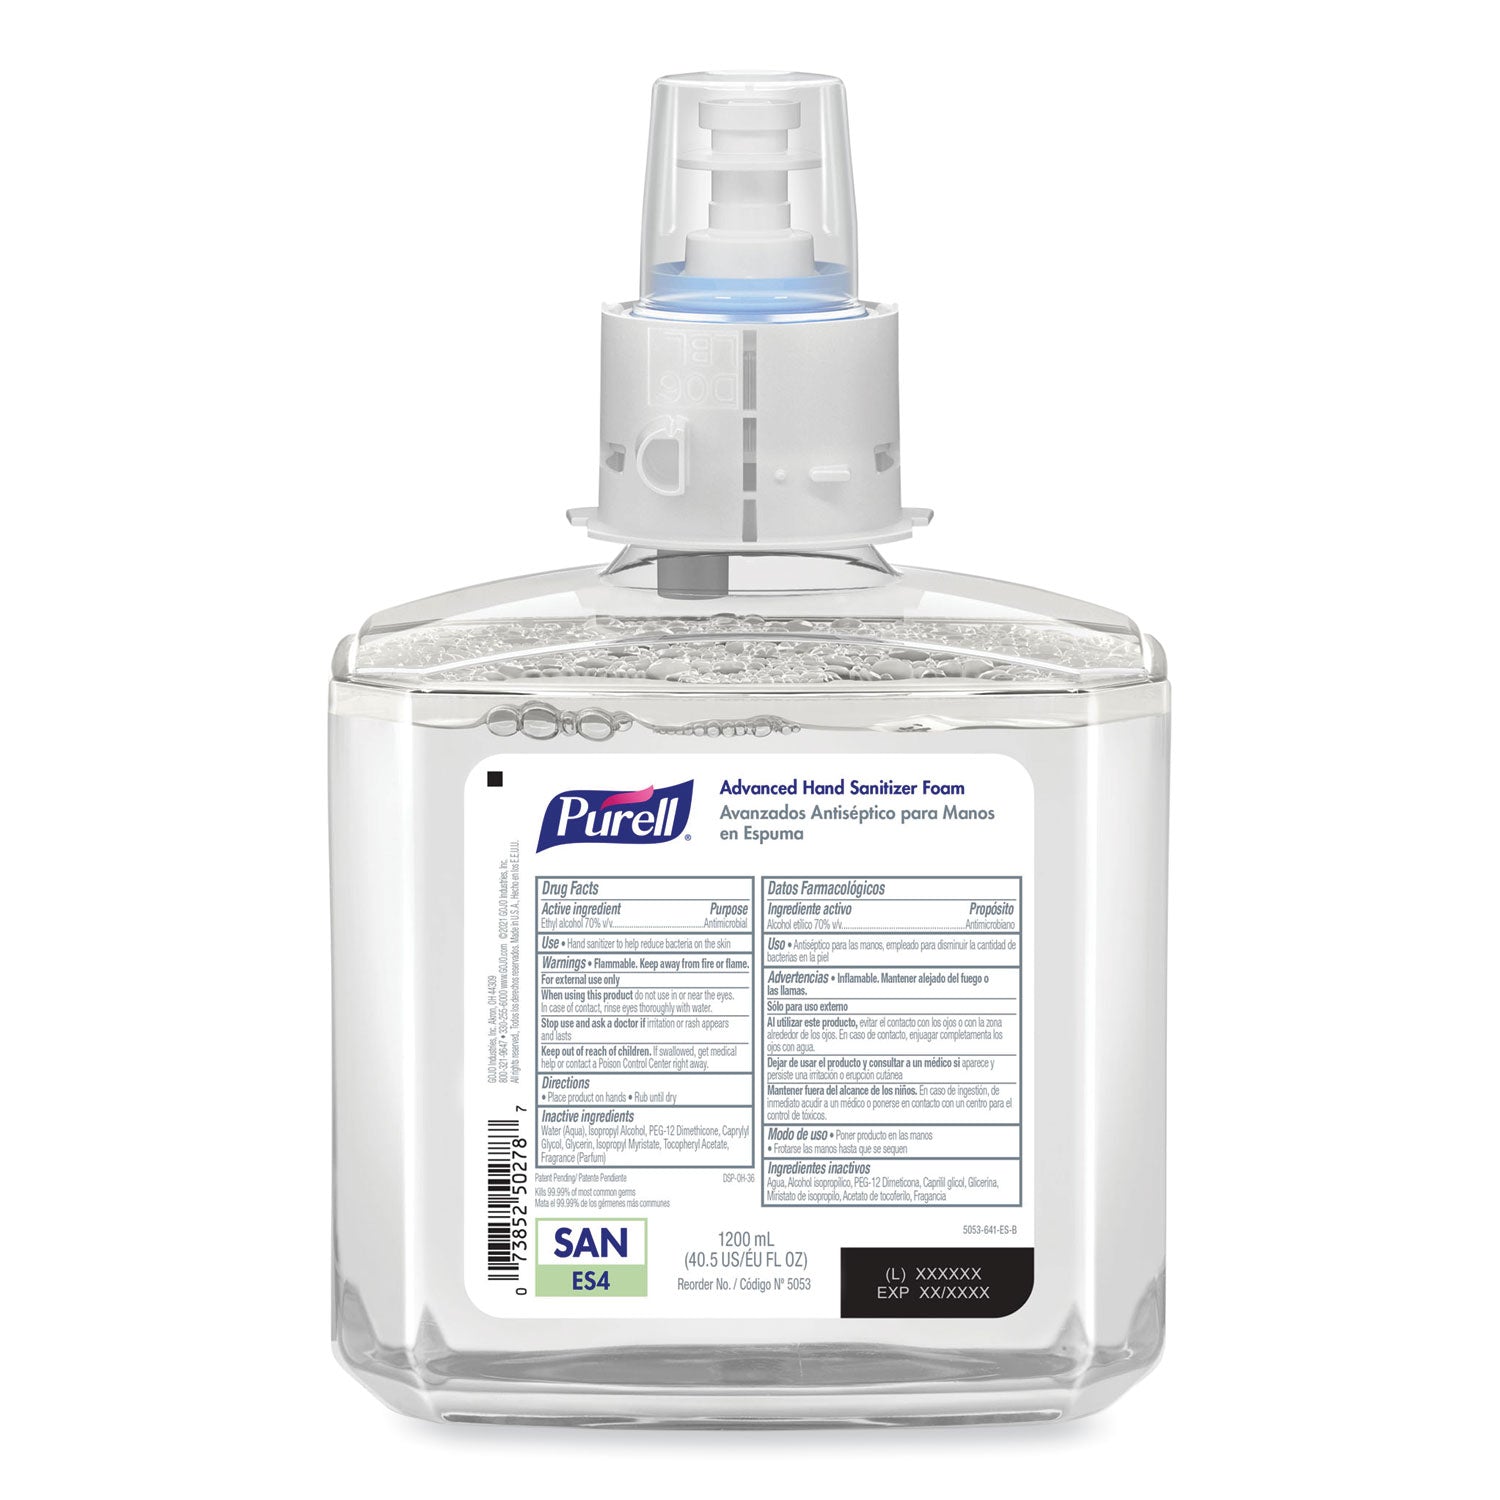 advanced-hand-sanitizer-foam-for-es4-dispensers-1200-ml-refill-refreshing-scent-2-carton_goj505302 - 2